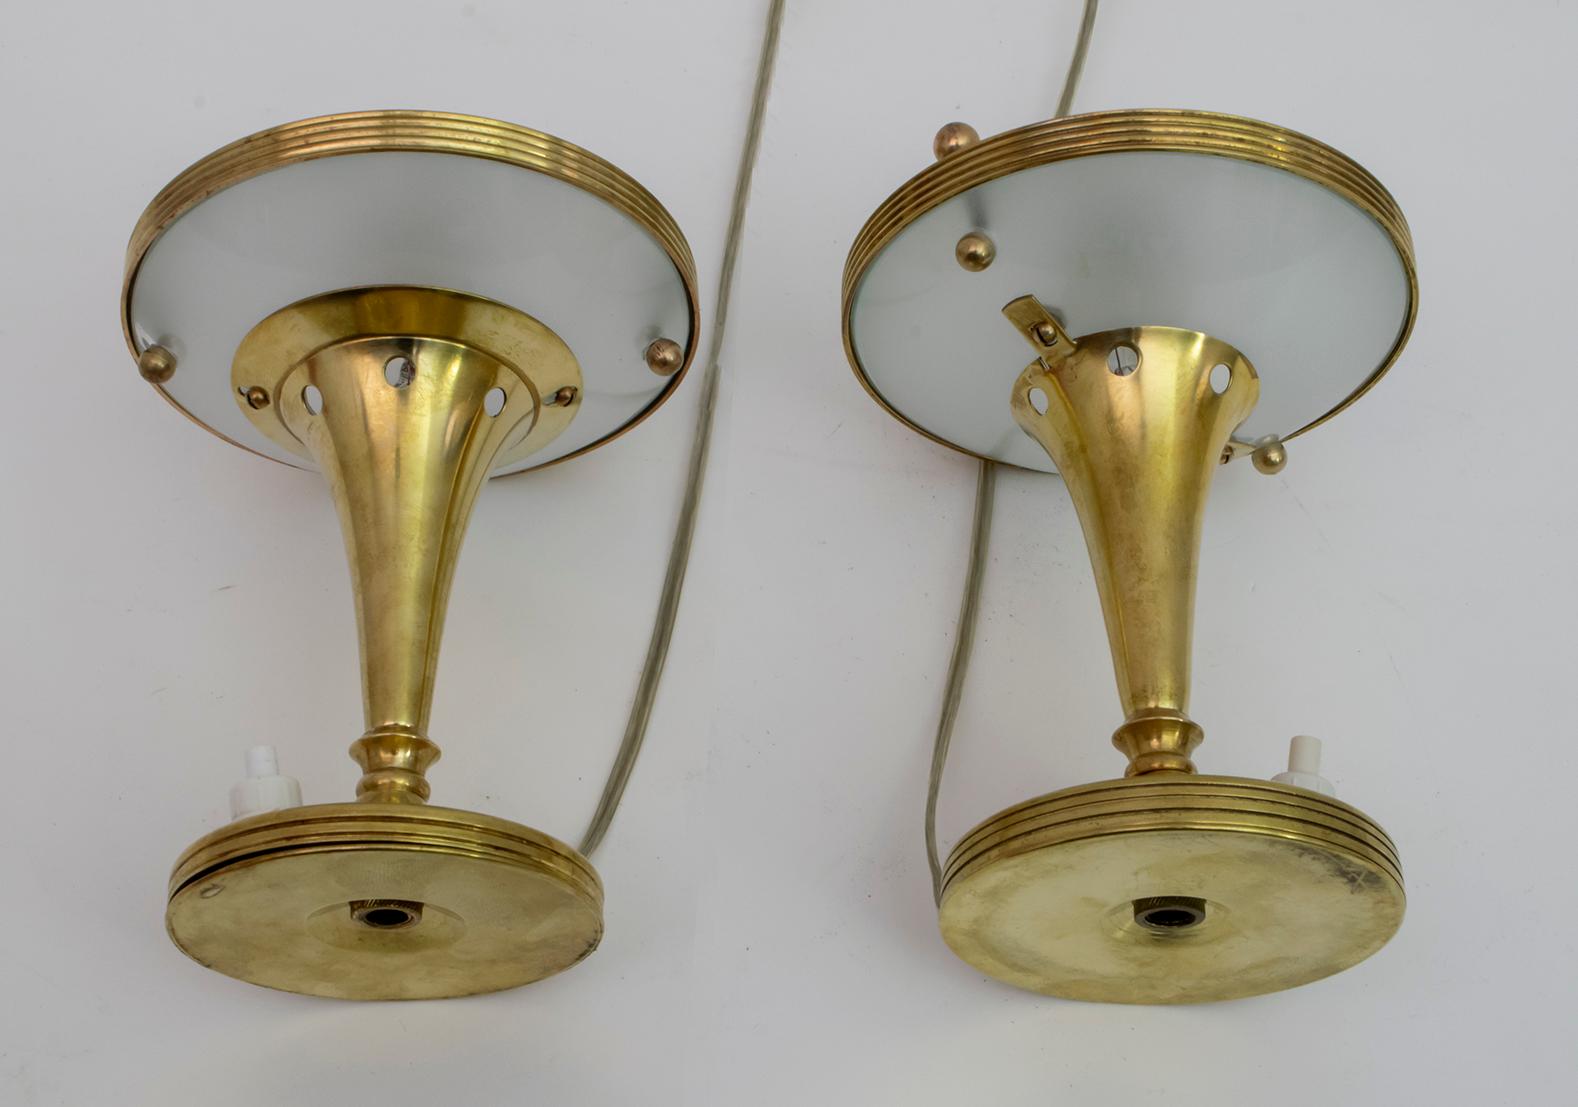 Mid-20th Century Pair of Pietro Chiesa Midcentury Italian Brass Table Lamps by Fontana Arte 1940s